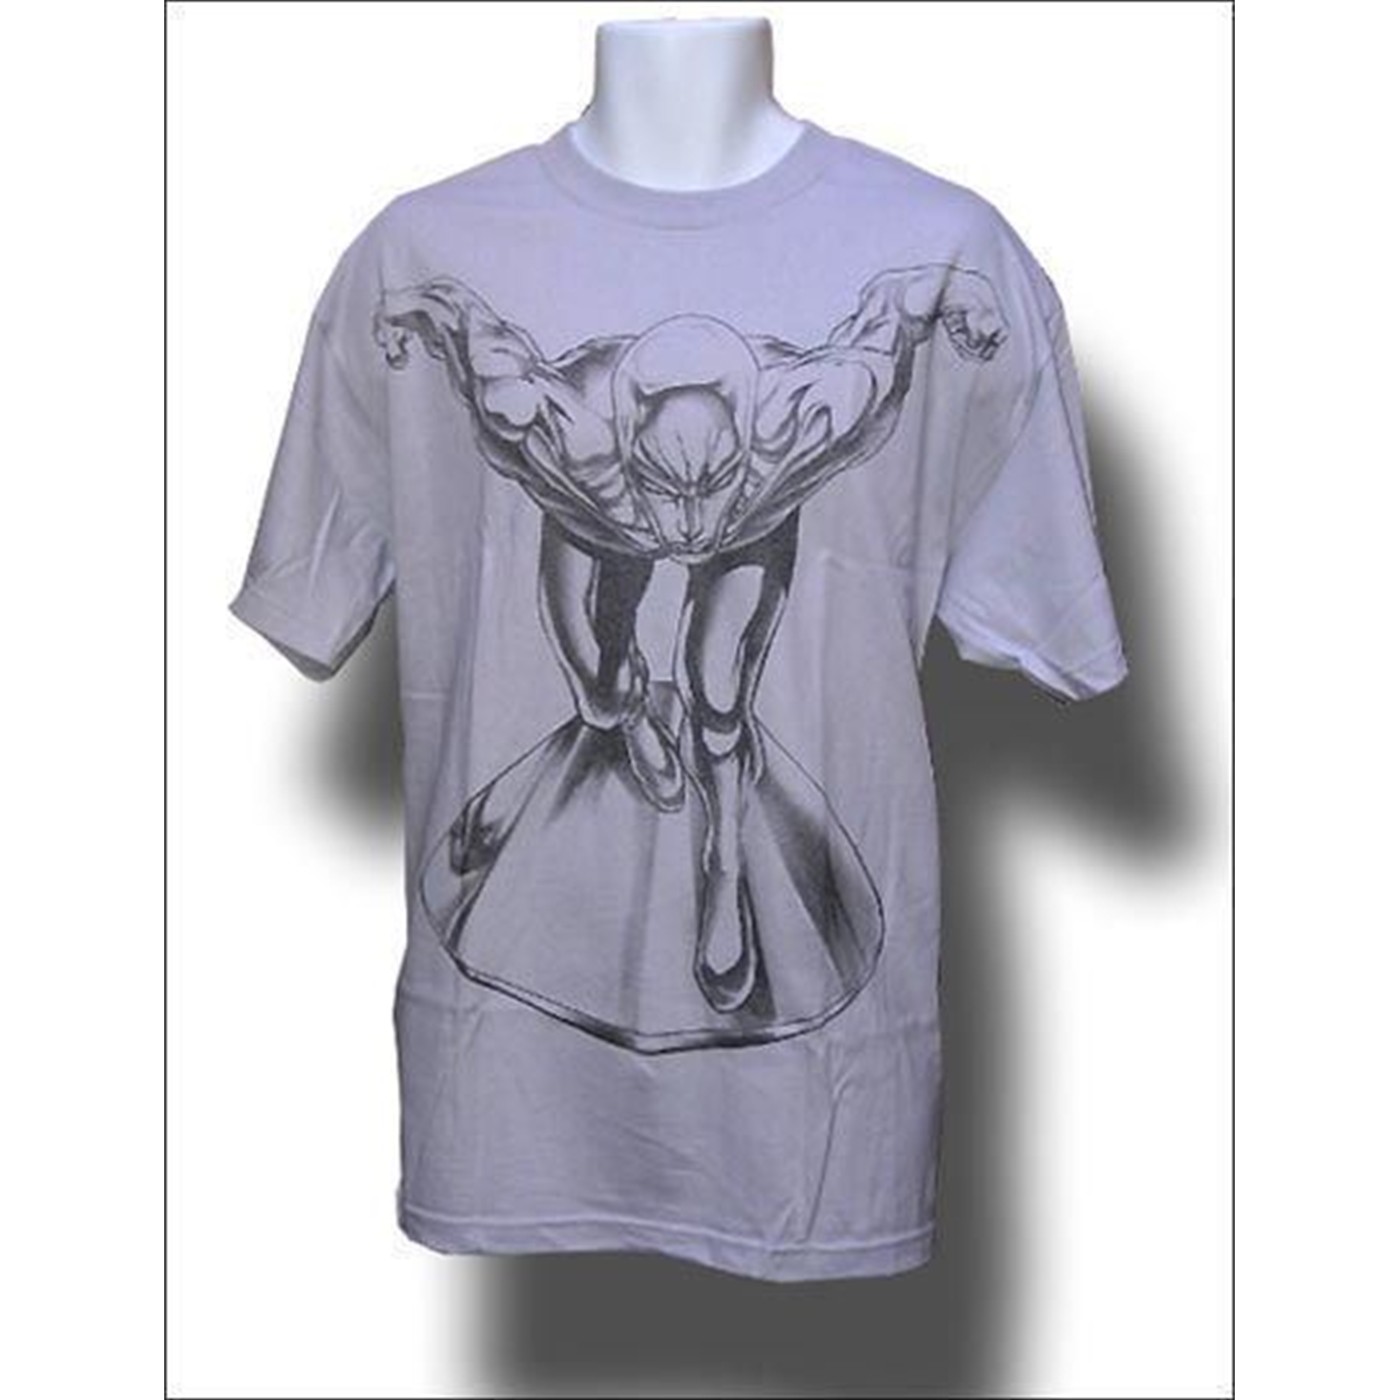 Silver Surfer Outline T-Shirt